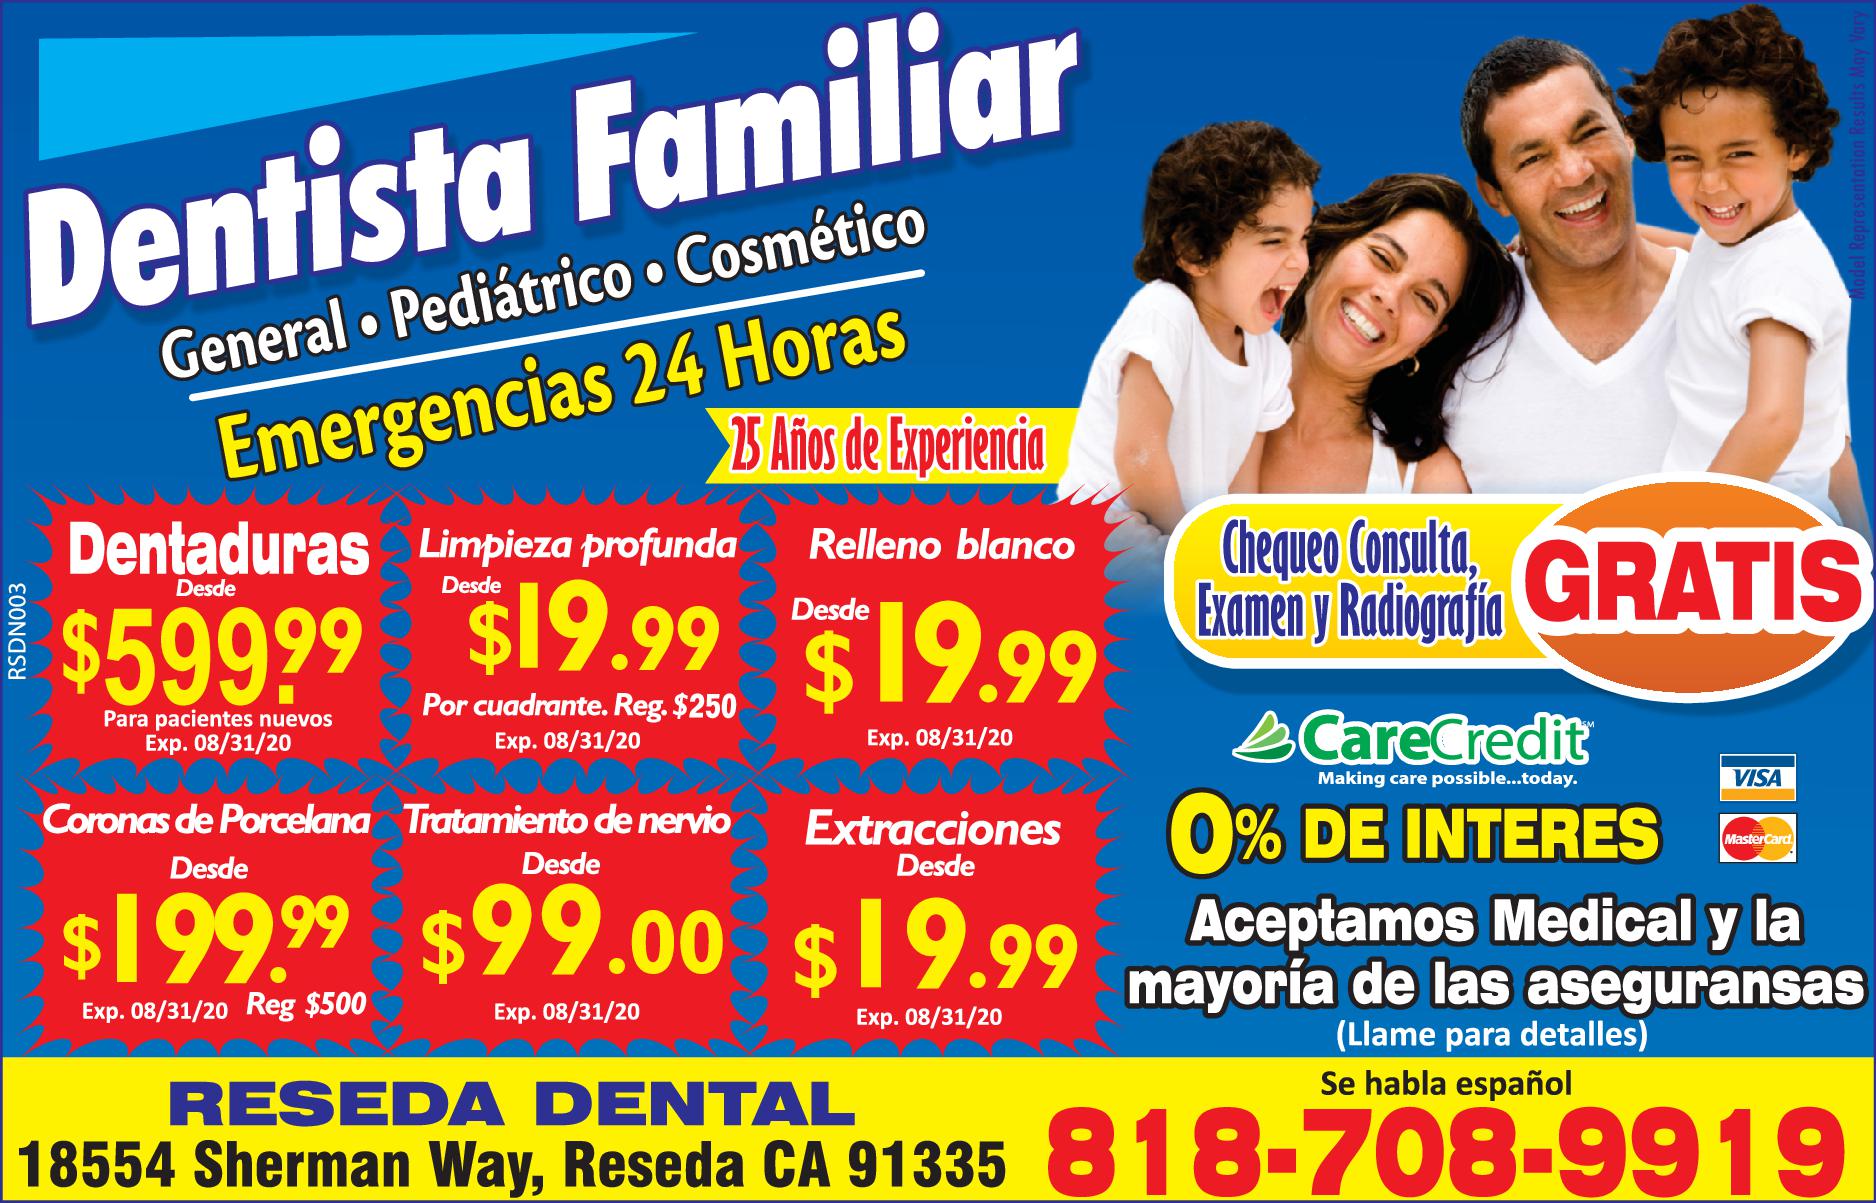 Reseda Dental Office